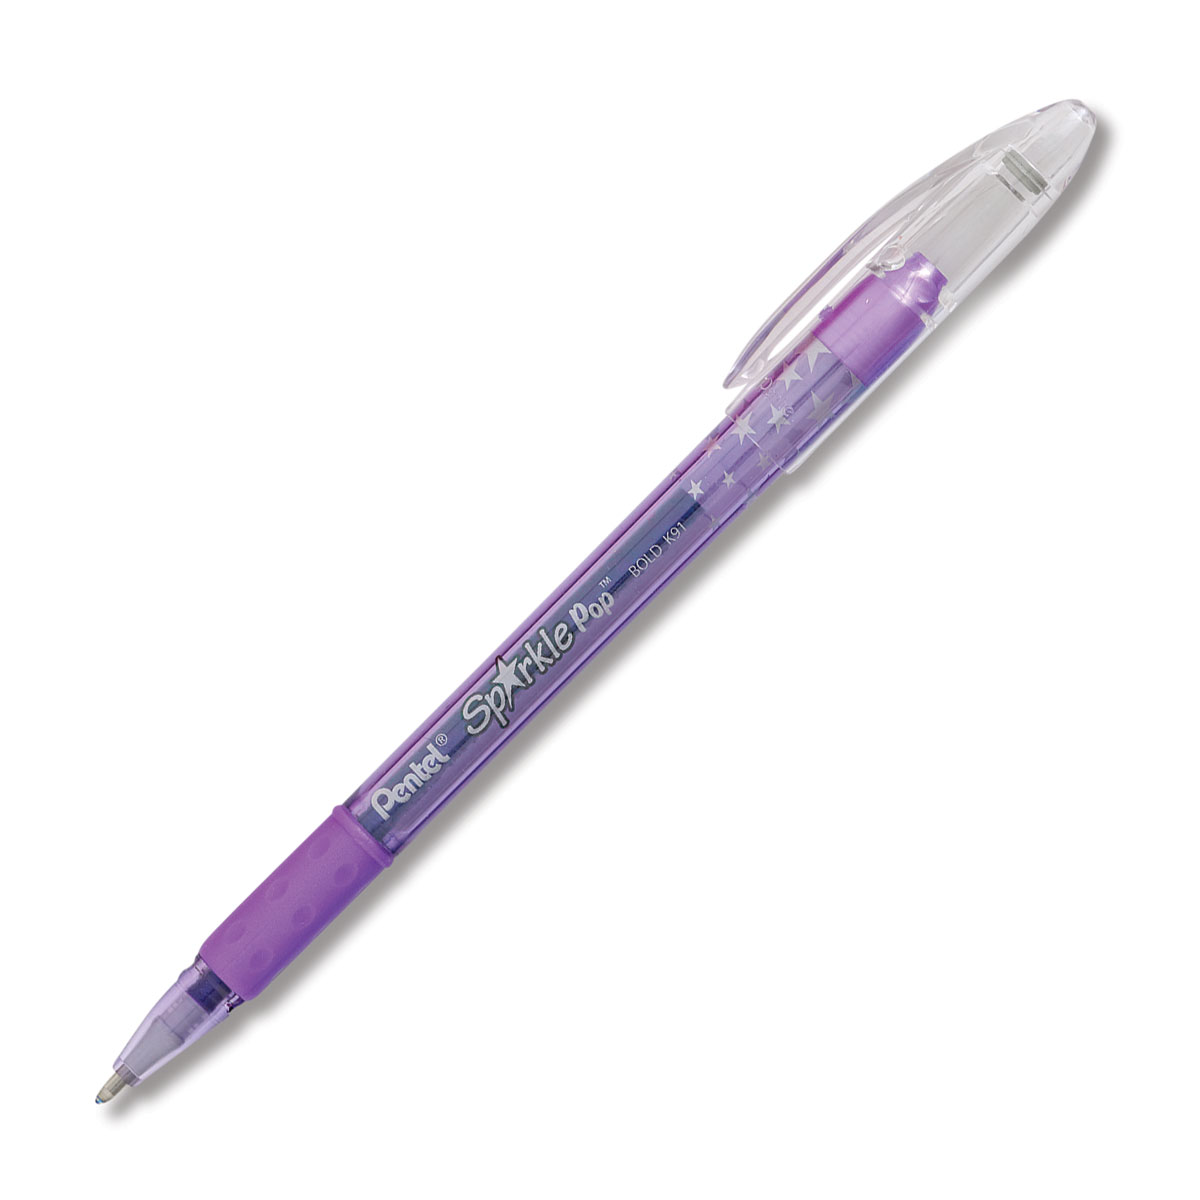 Pentel Sparkle Pop Pen